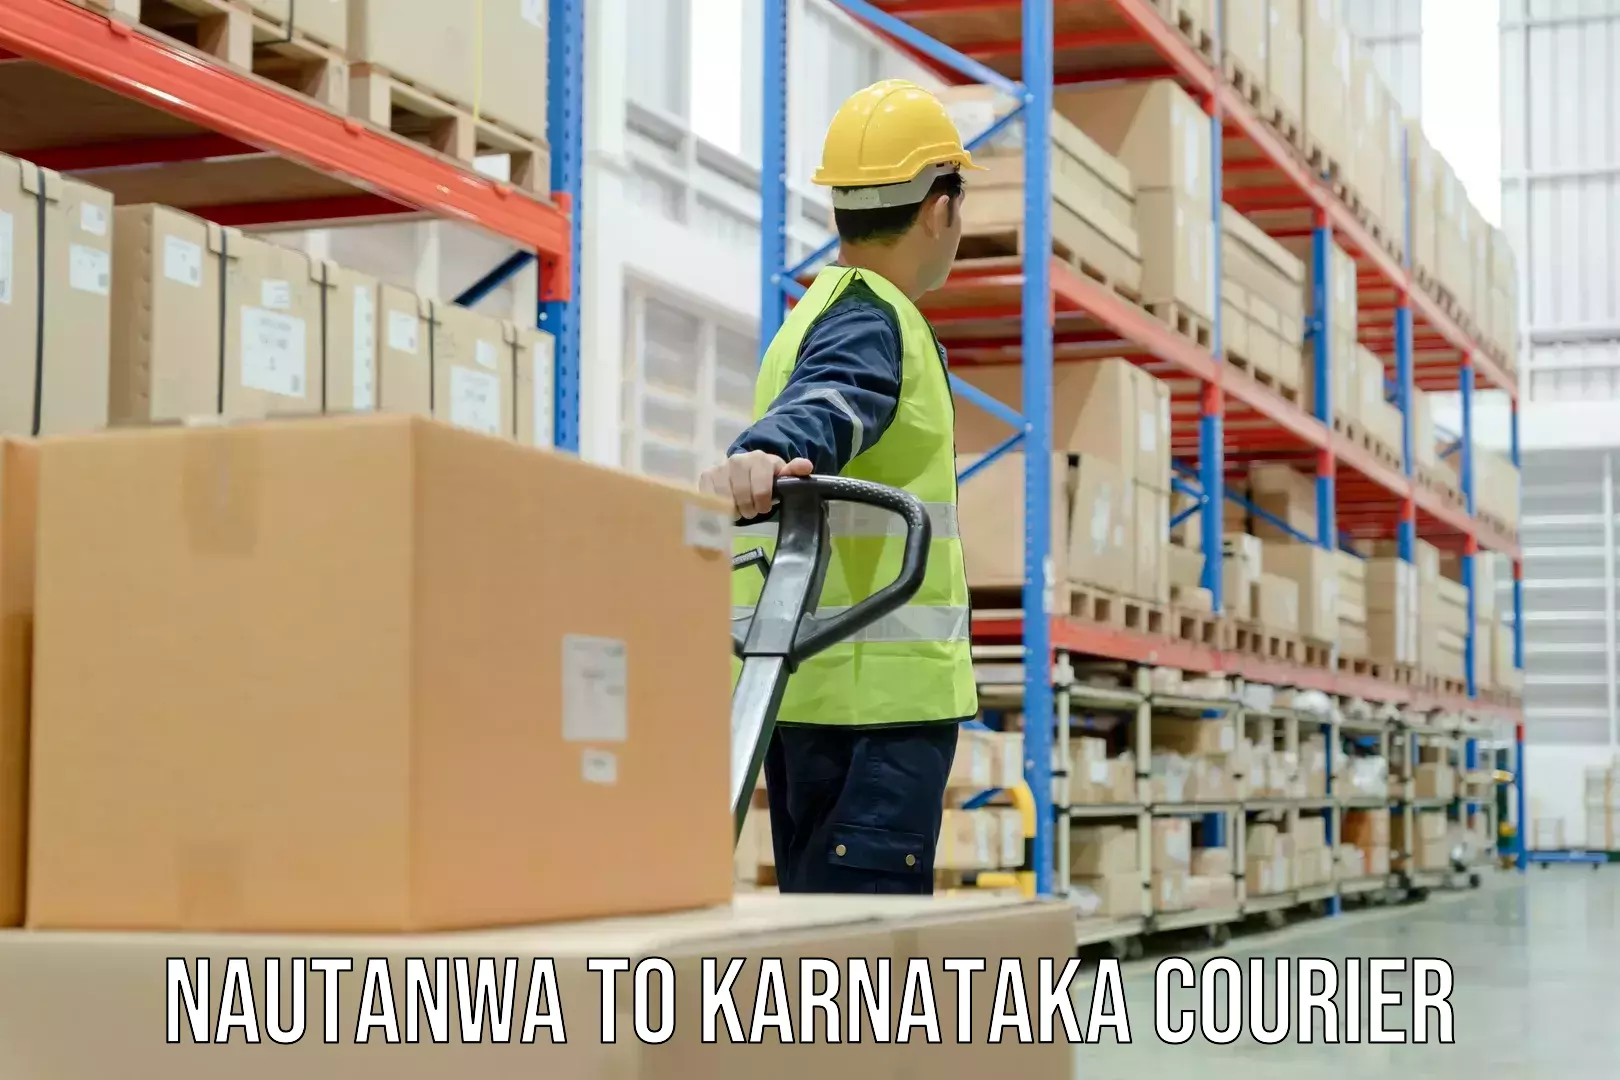 Courier service booking Nautanwa to Karnataka